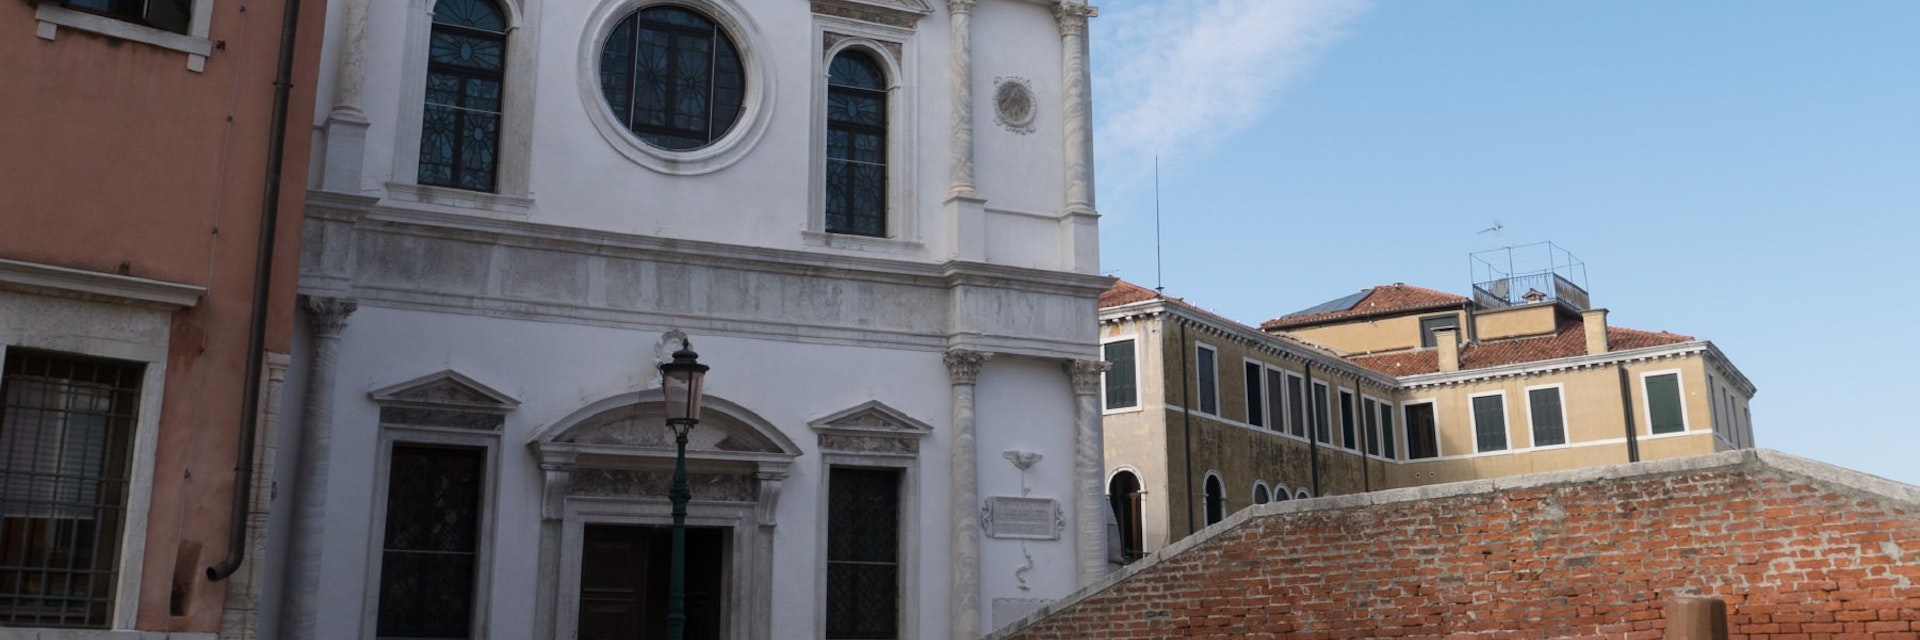 The church facade and bridge at San Sebastiano